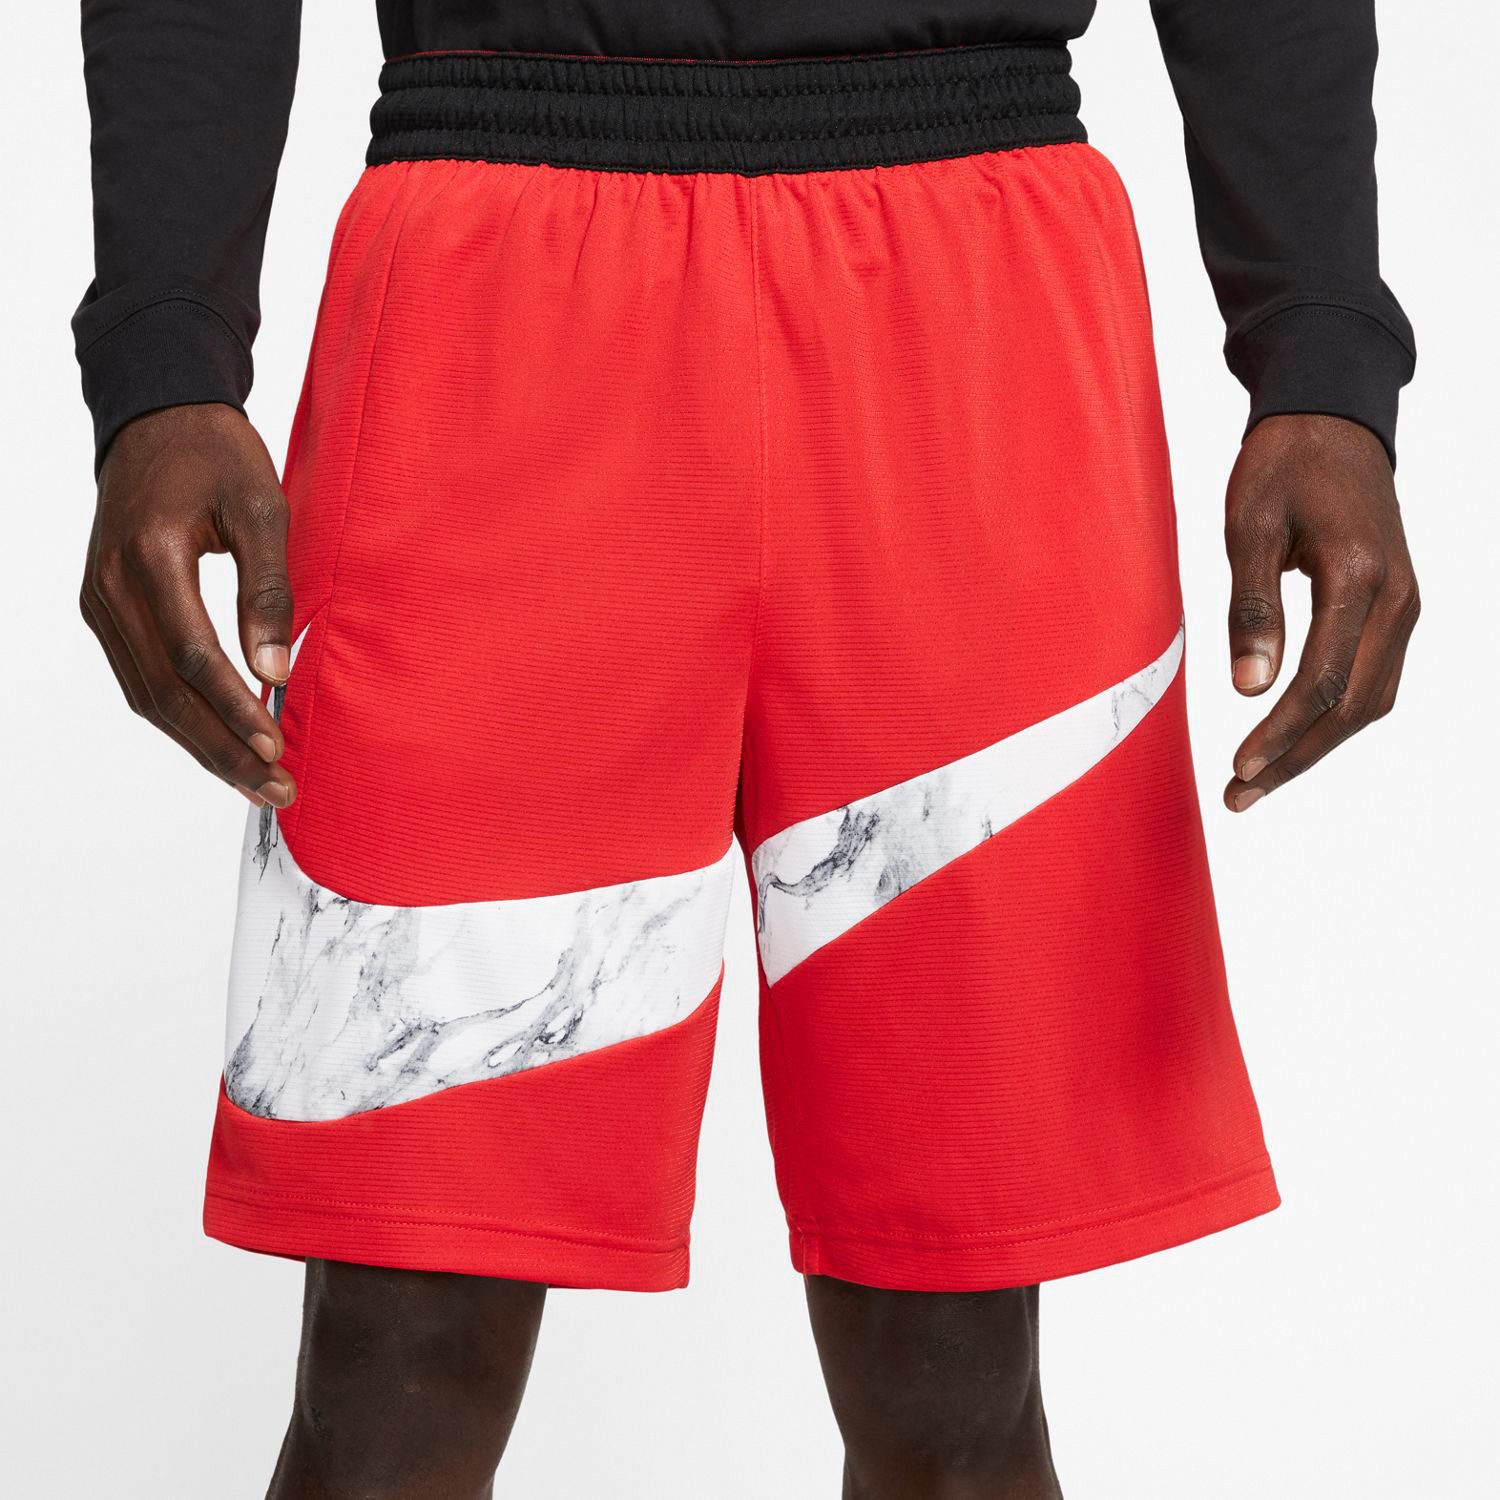 Шорты nike dri. Nike Dri-Fit hbr. Шорты Nike Dri Fit. Шорты Nike Dri-Fit Basketball Red. Шорты шорты hbr Basketball short,.